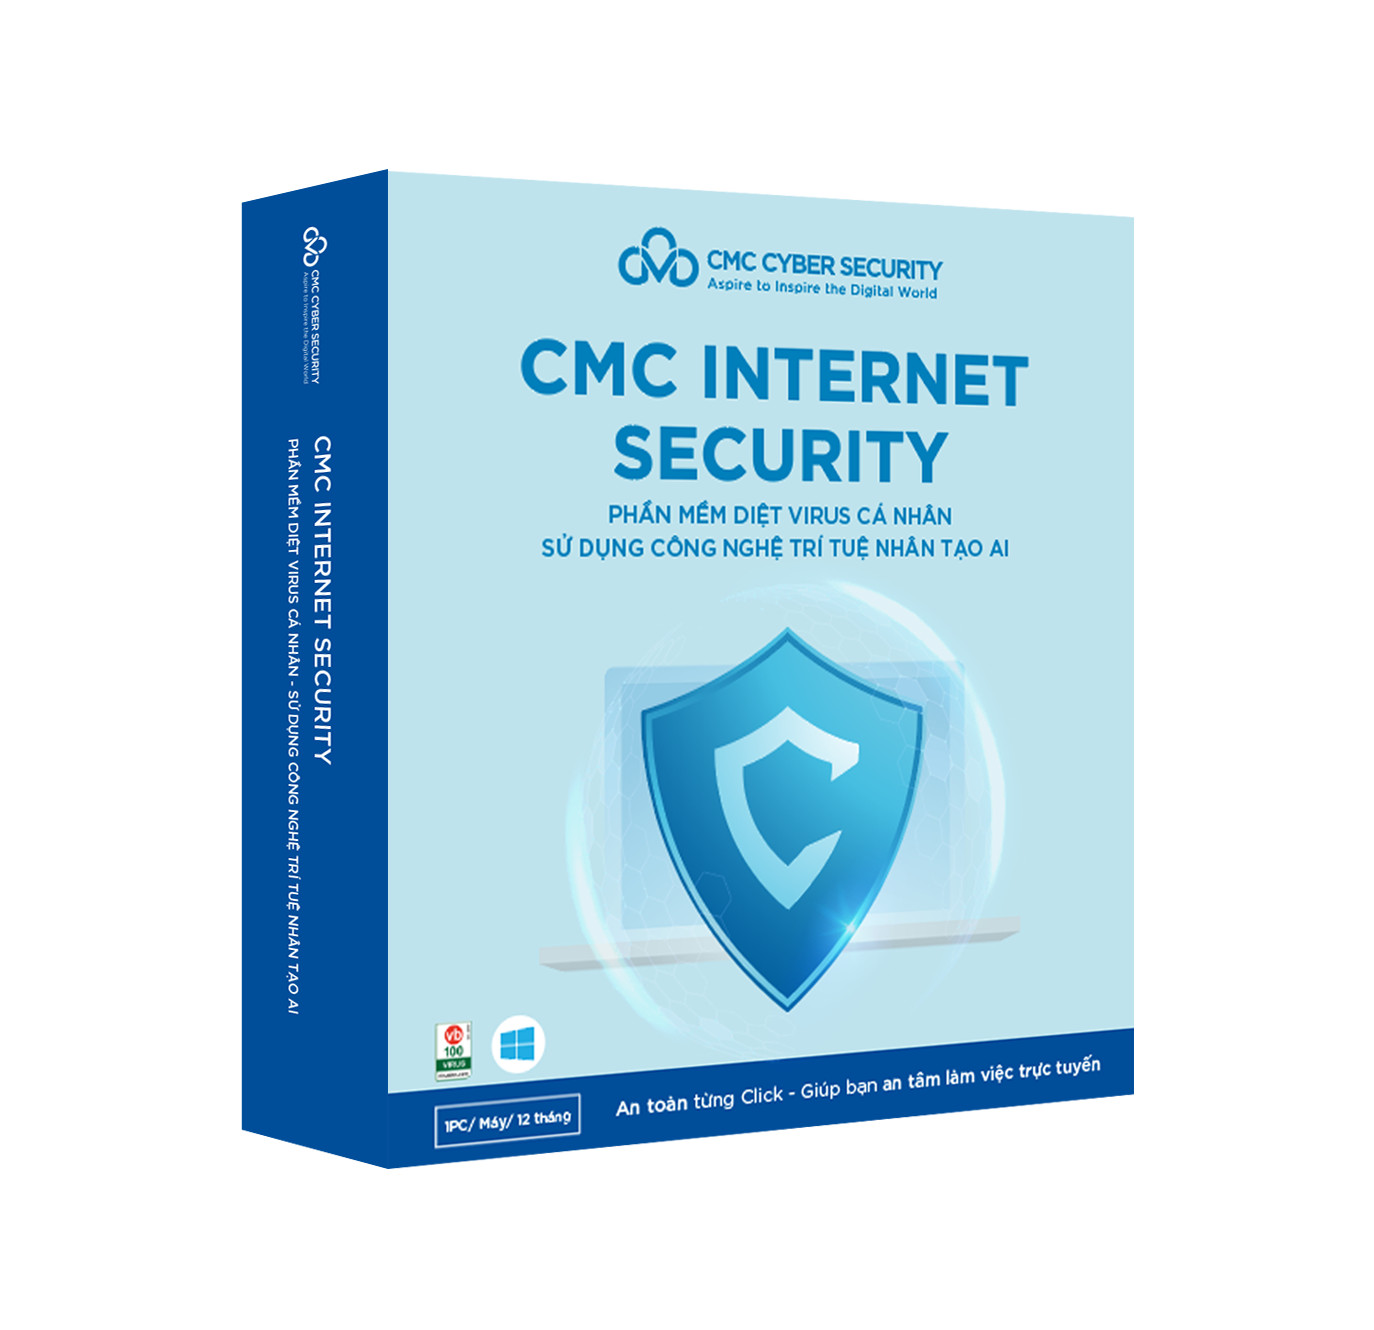 Phần mềm diệt Virus CMC Internet Security